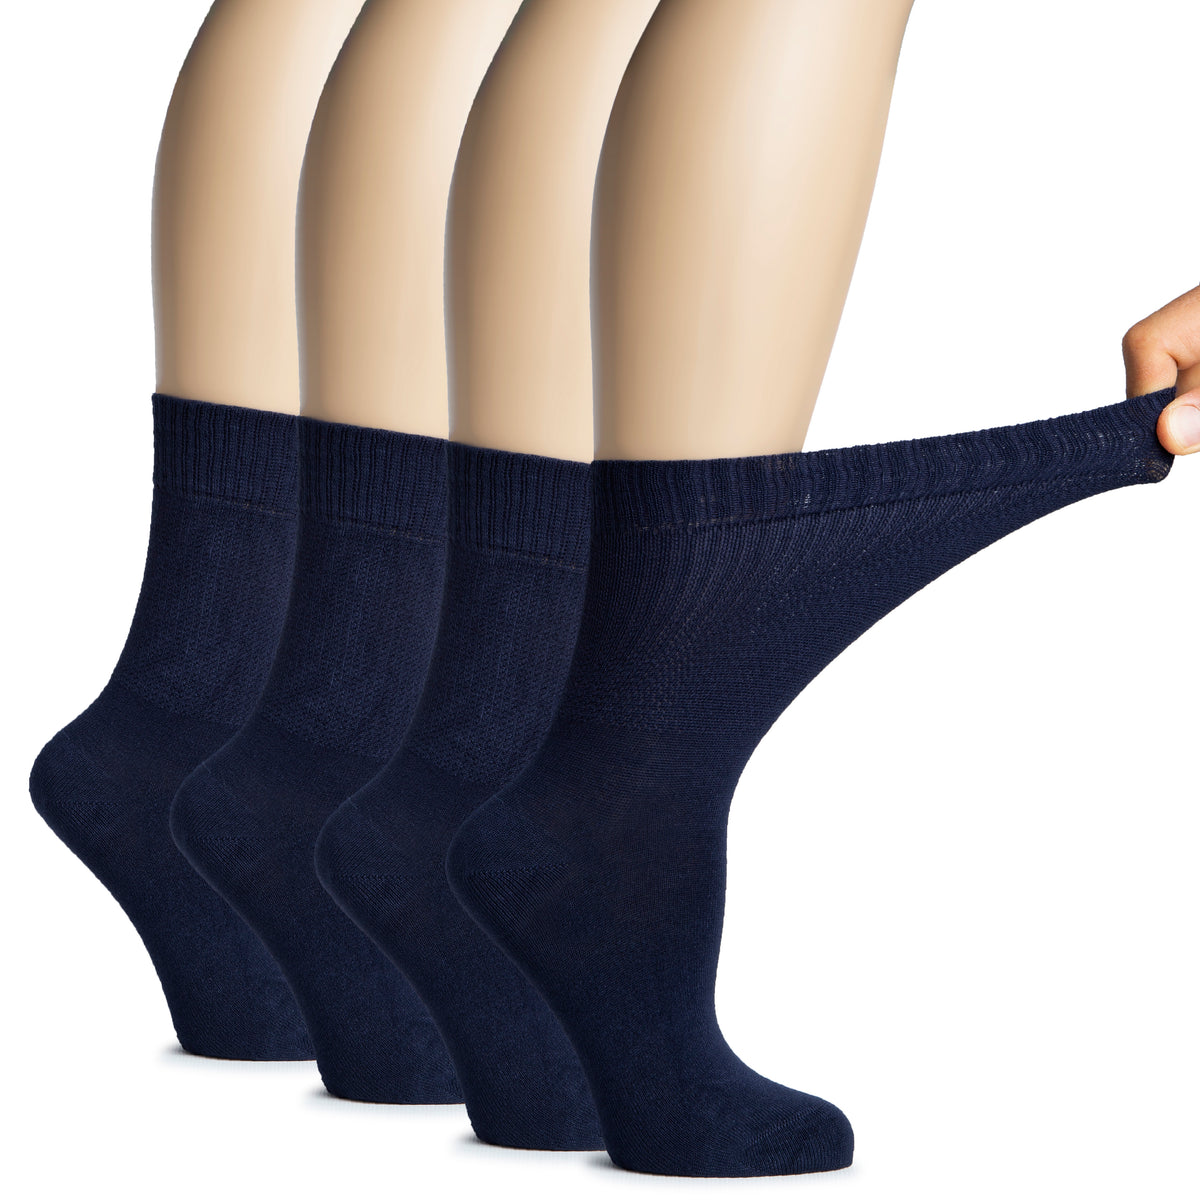 Hugh Ugoli Women's Bamboo Diabetic Crew Thin Socks With Seamless Toe, Soft Socks For Pregnant Women & Elderly People, 4 Pairs | Shoe Size: 6-9 | Melange Gray